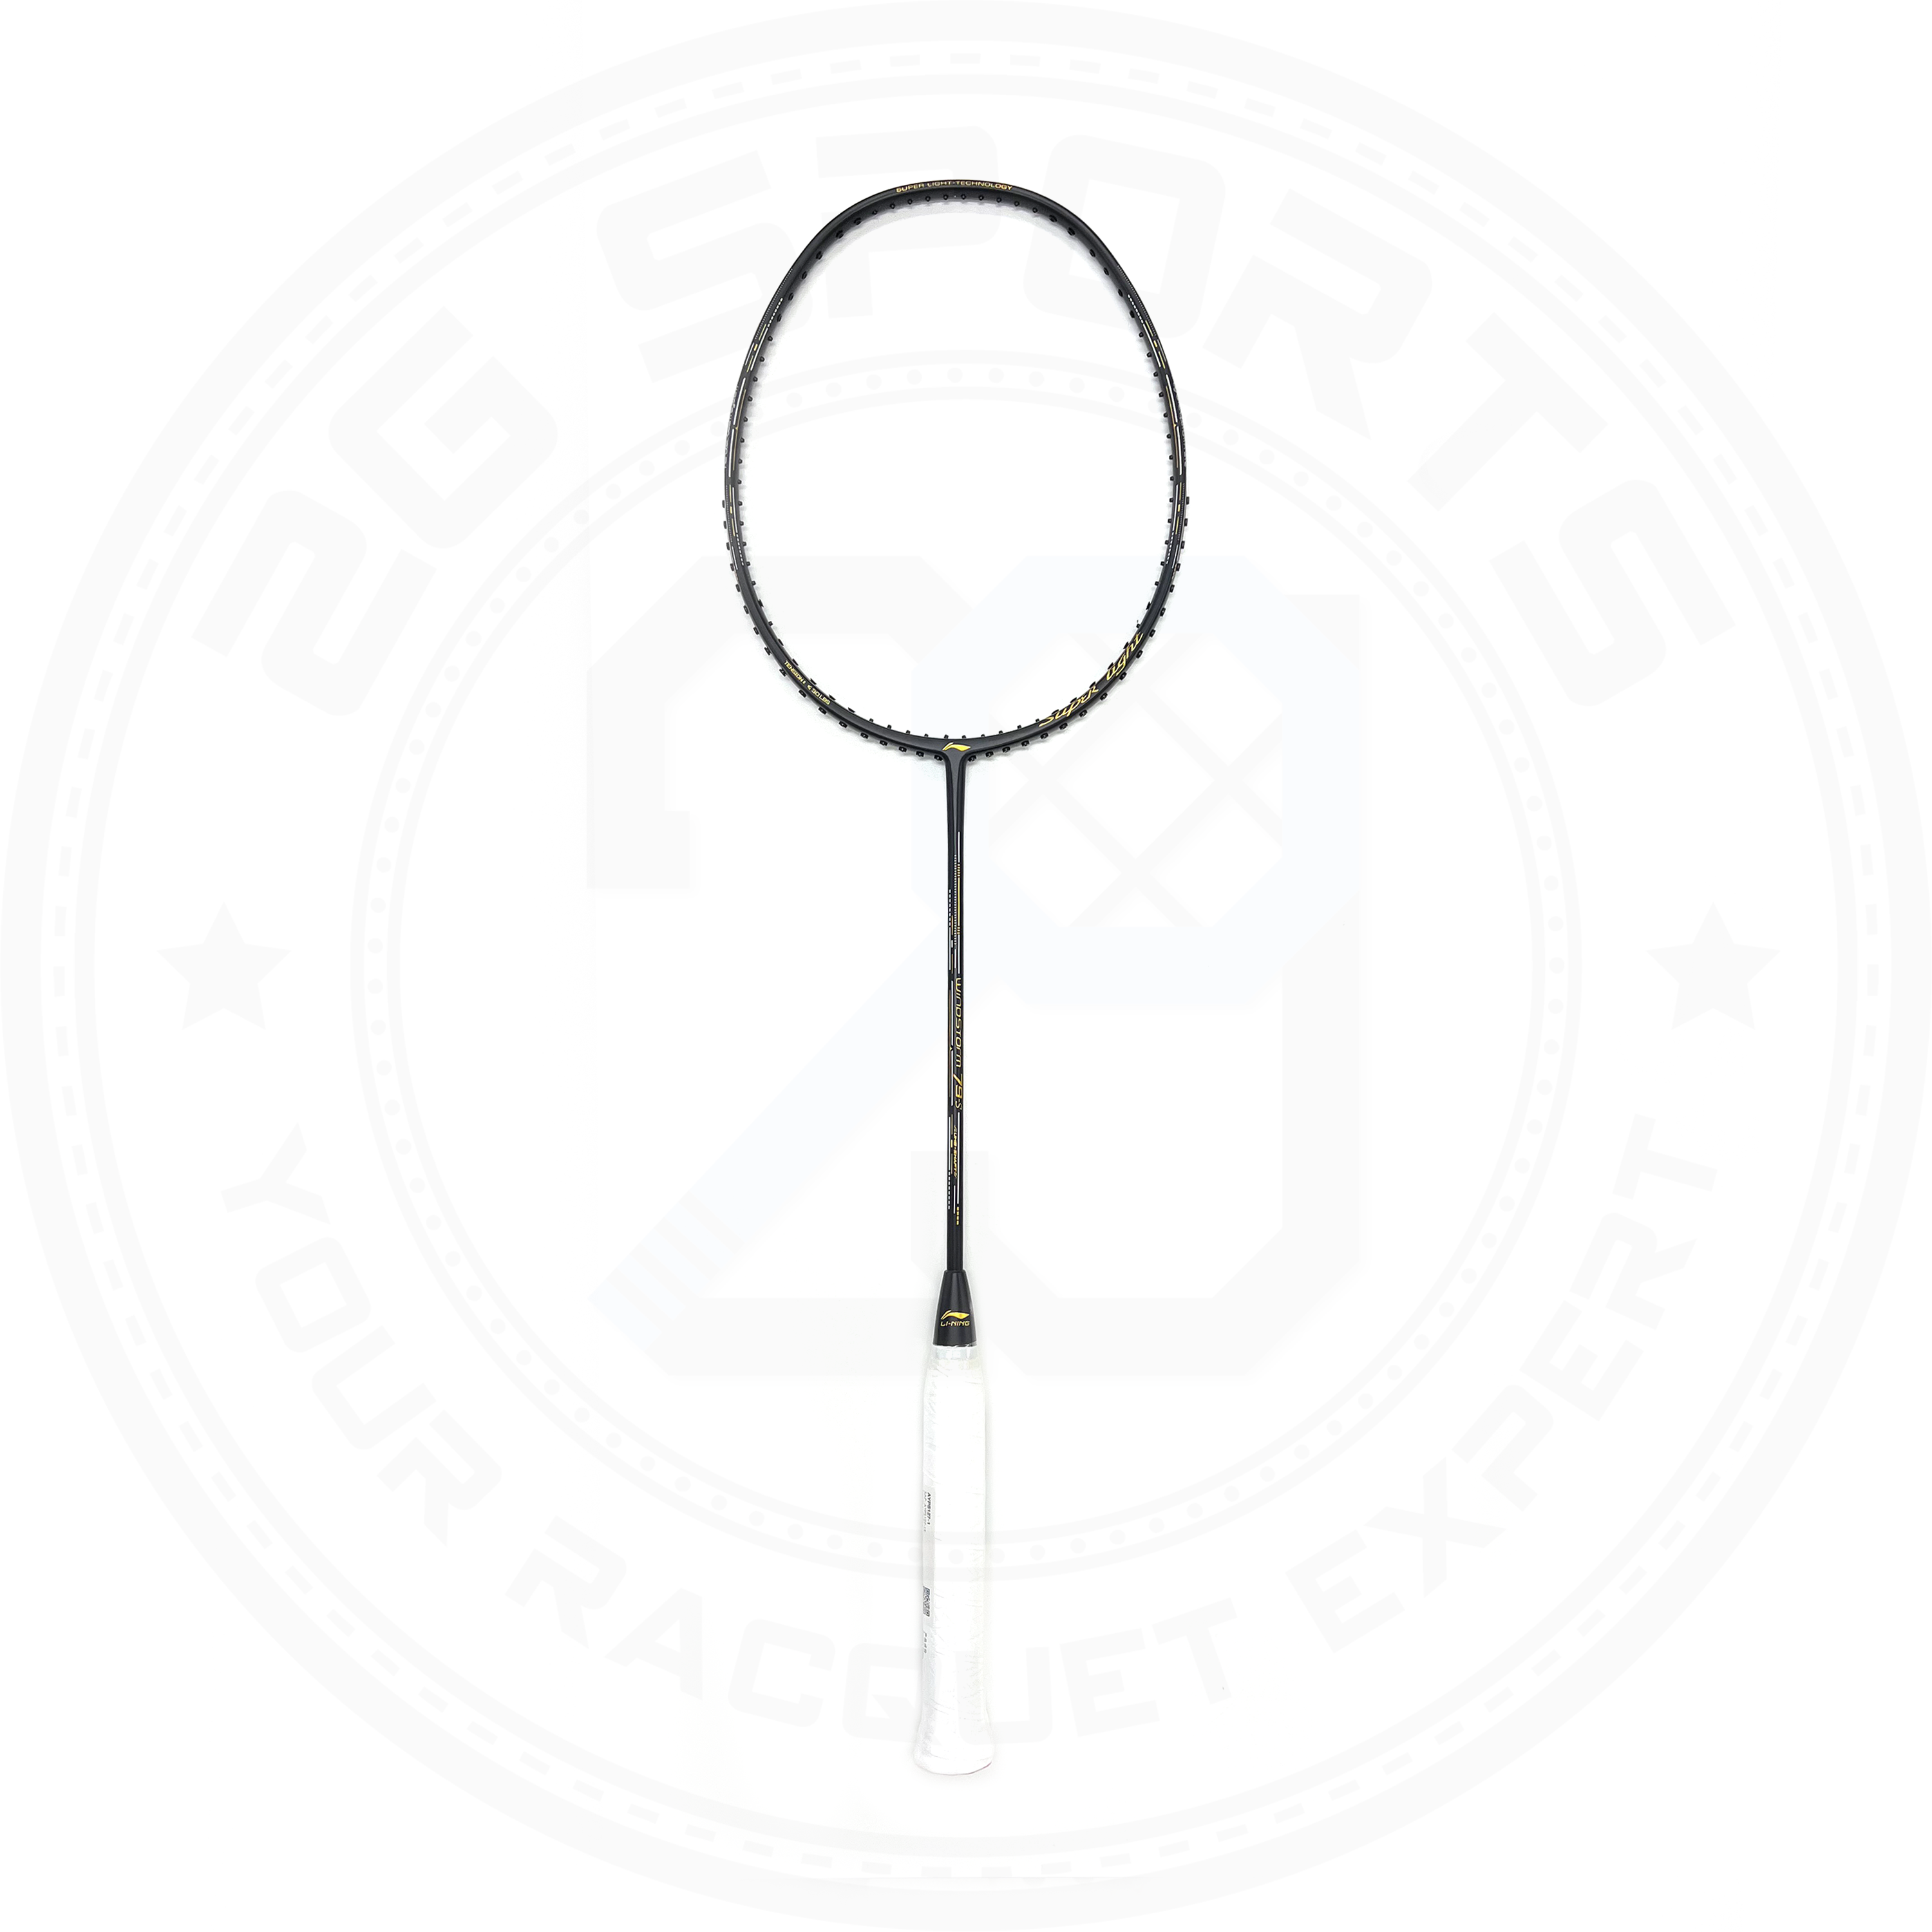 Li-Ning Windstorm 79s Lightweight Balanced Badminton Racquet Black/ Gold 5U(79g)G6